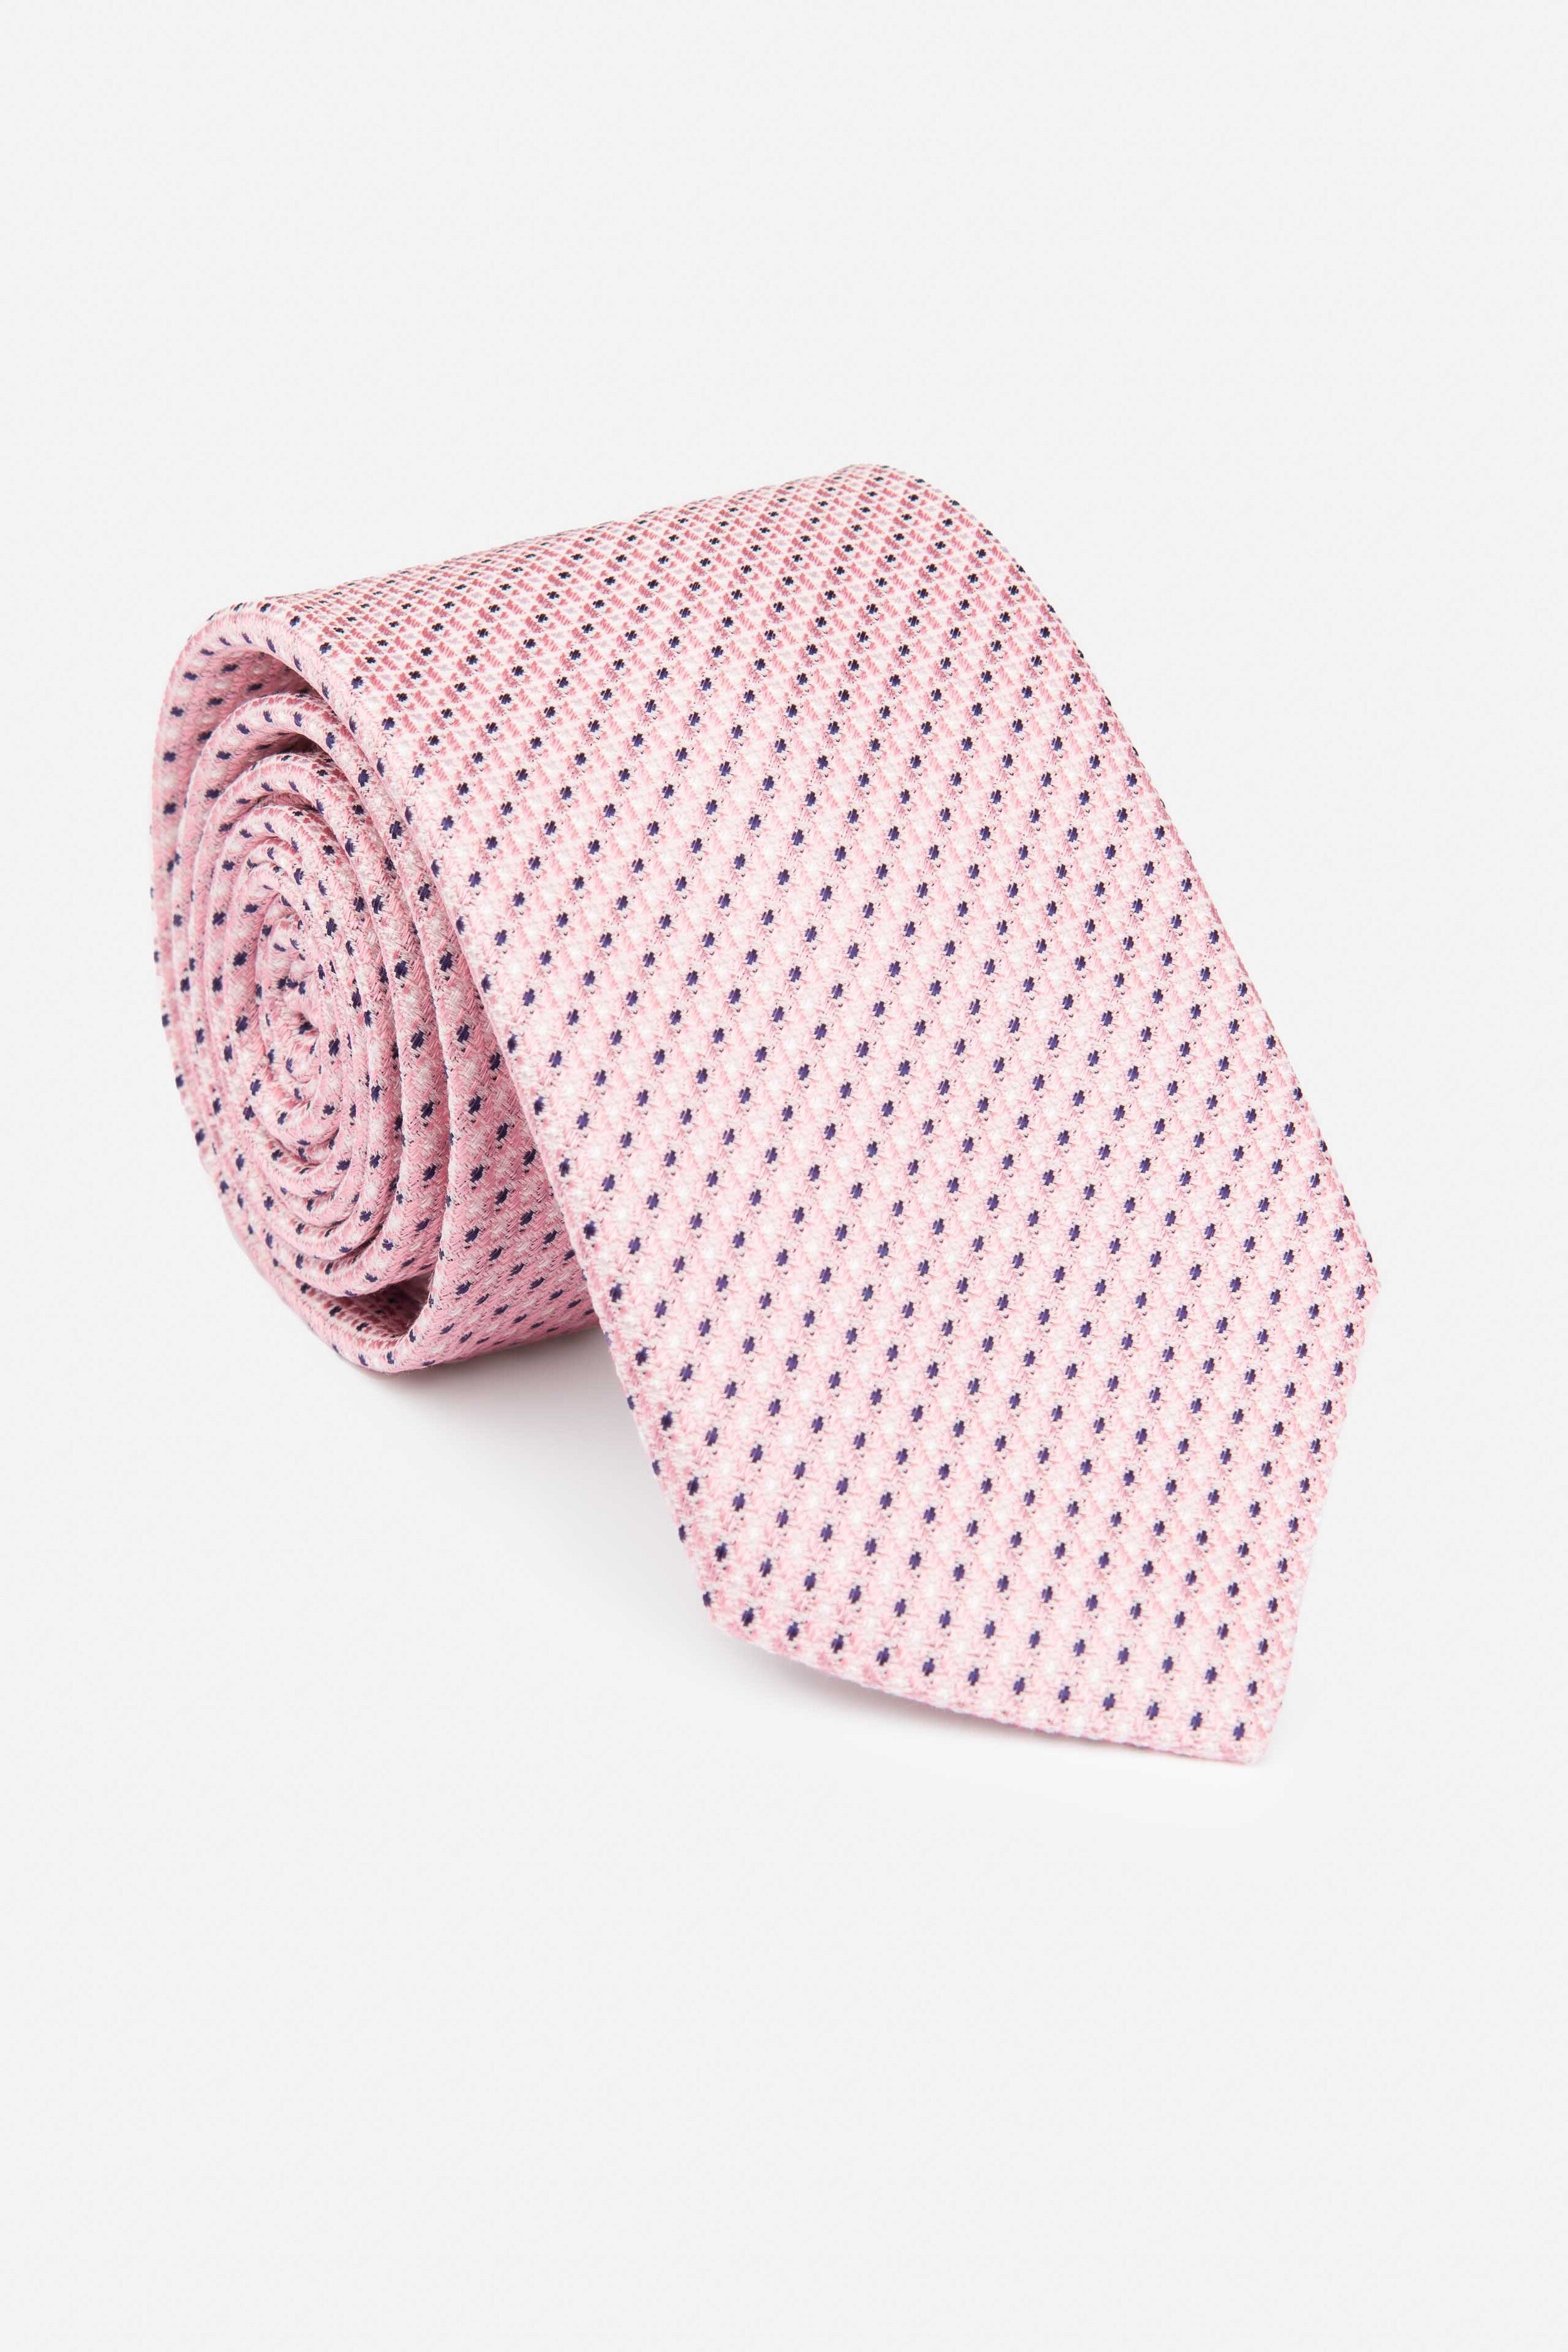 Geometric patterned tie - Pink pattern